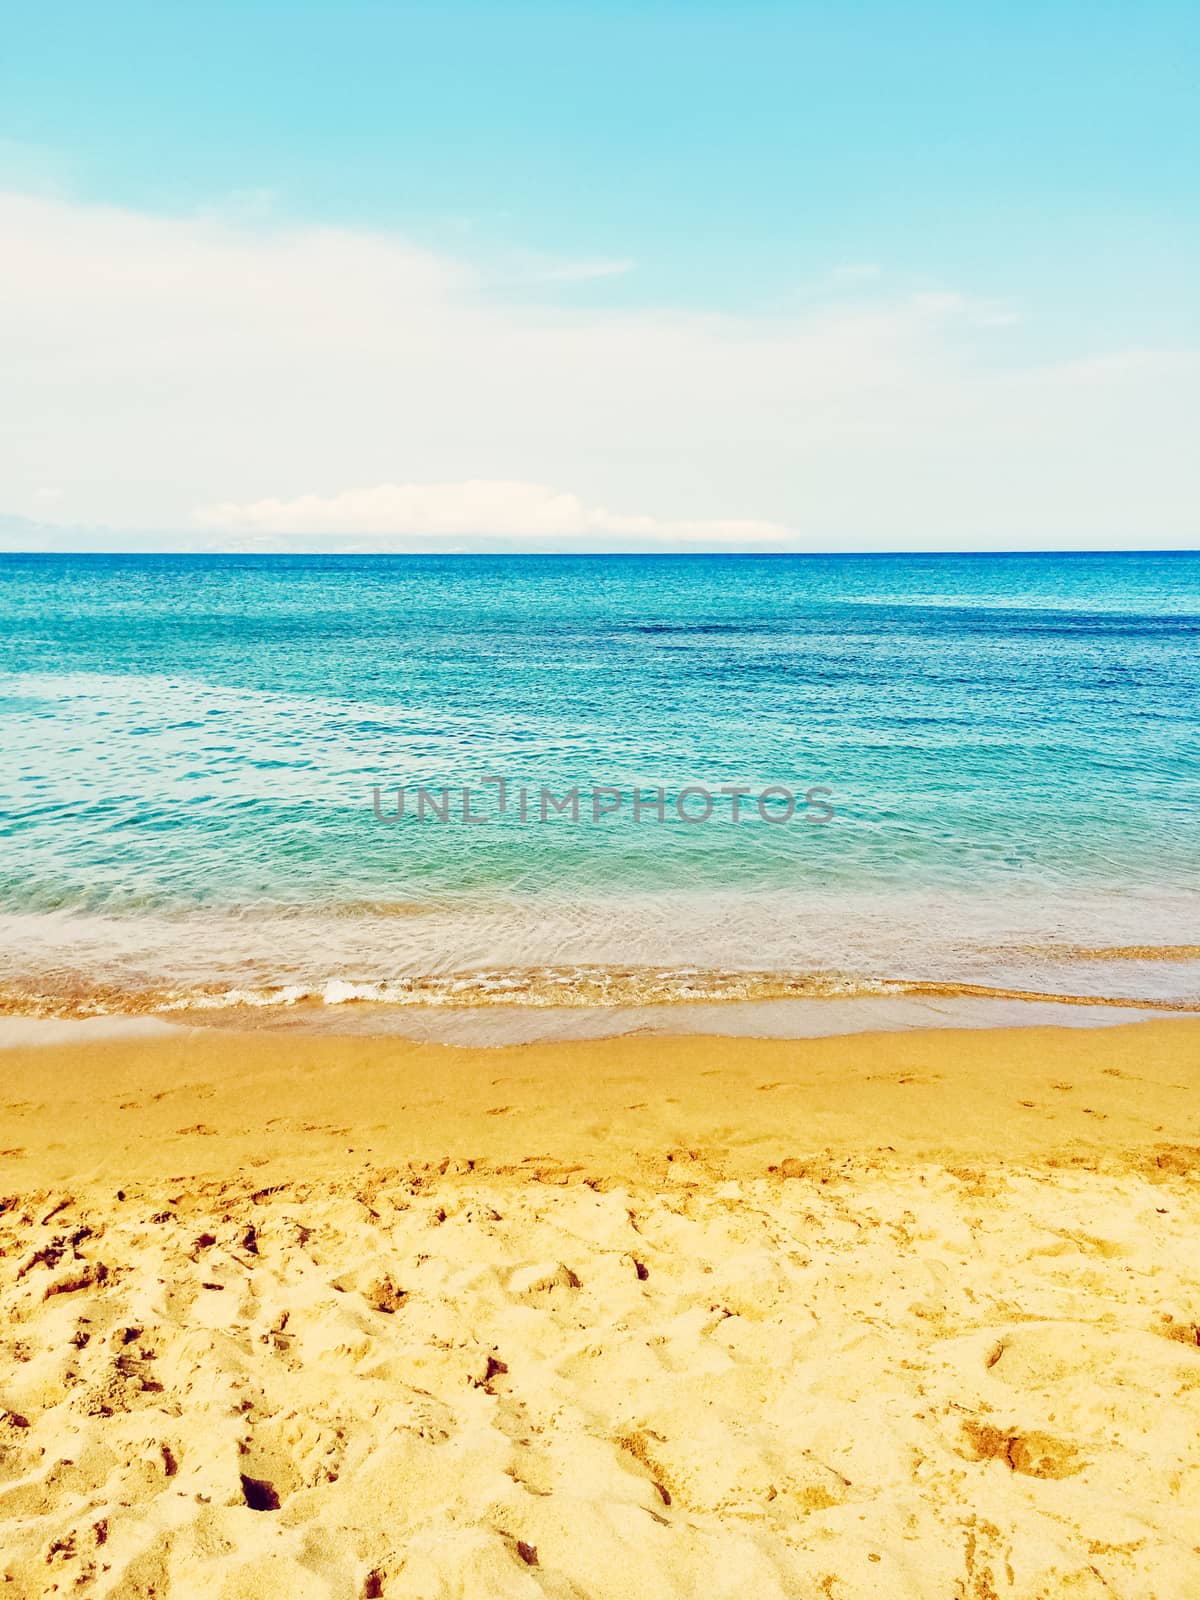 Bright blue sea and sand beach. Mediterranean nature.